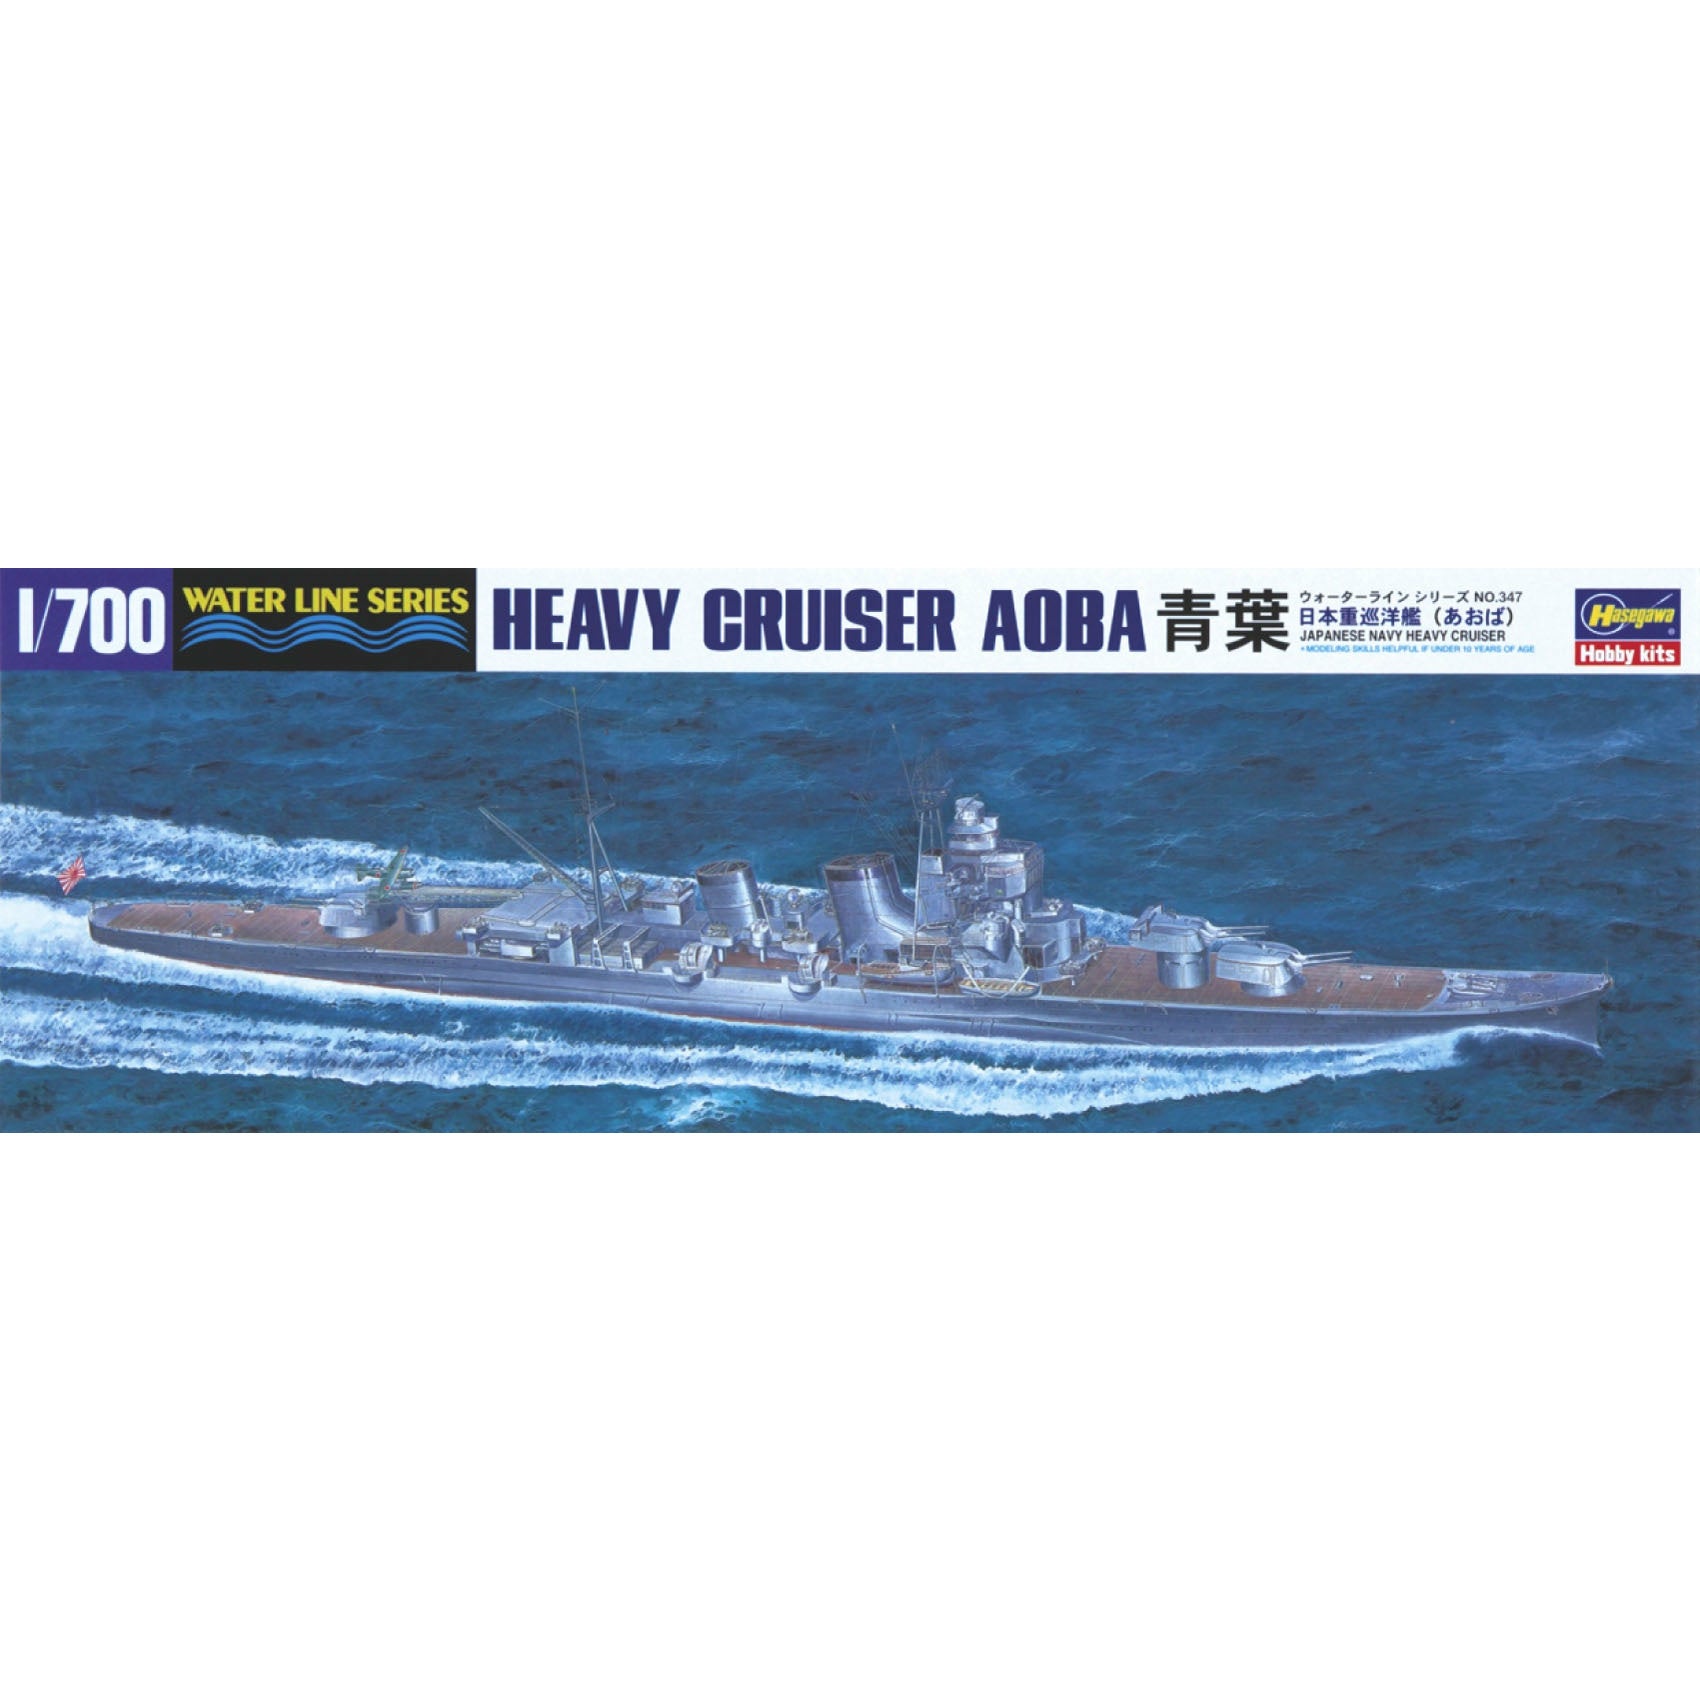 IJN Heavy Cruiser Aoba 1/700 Model Ship Kit #49347 by Hasegawa